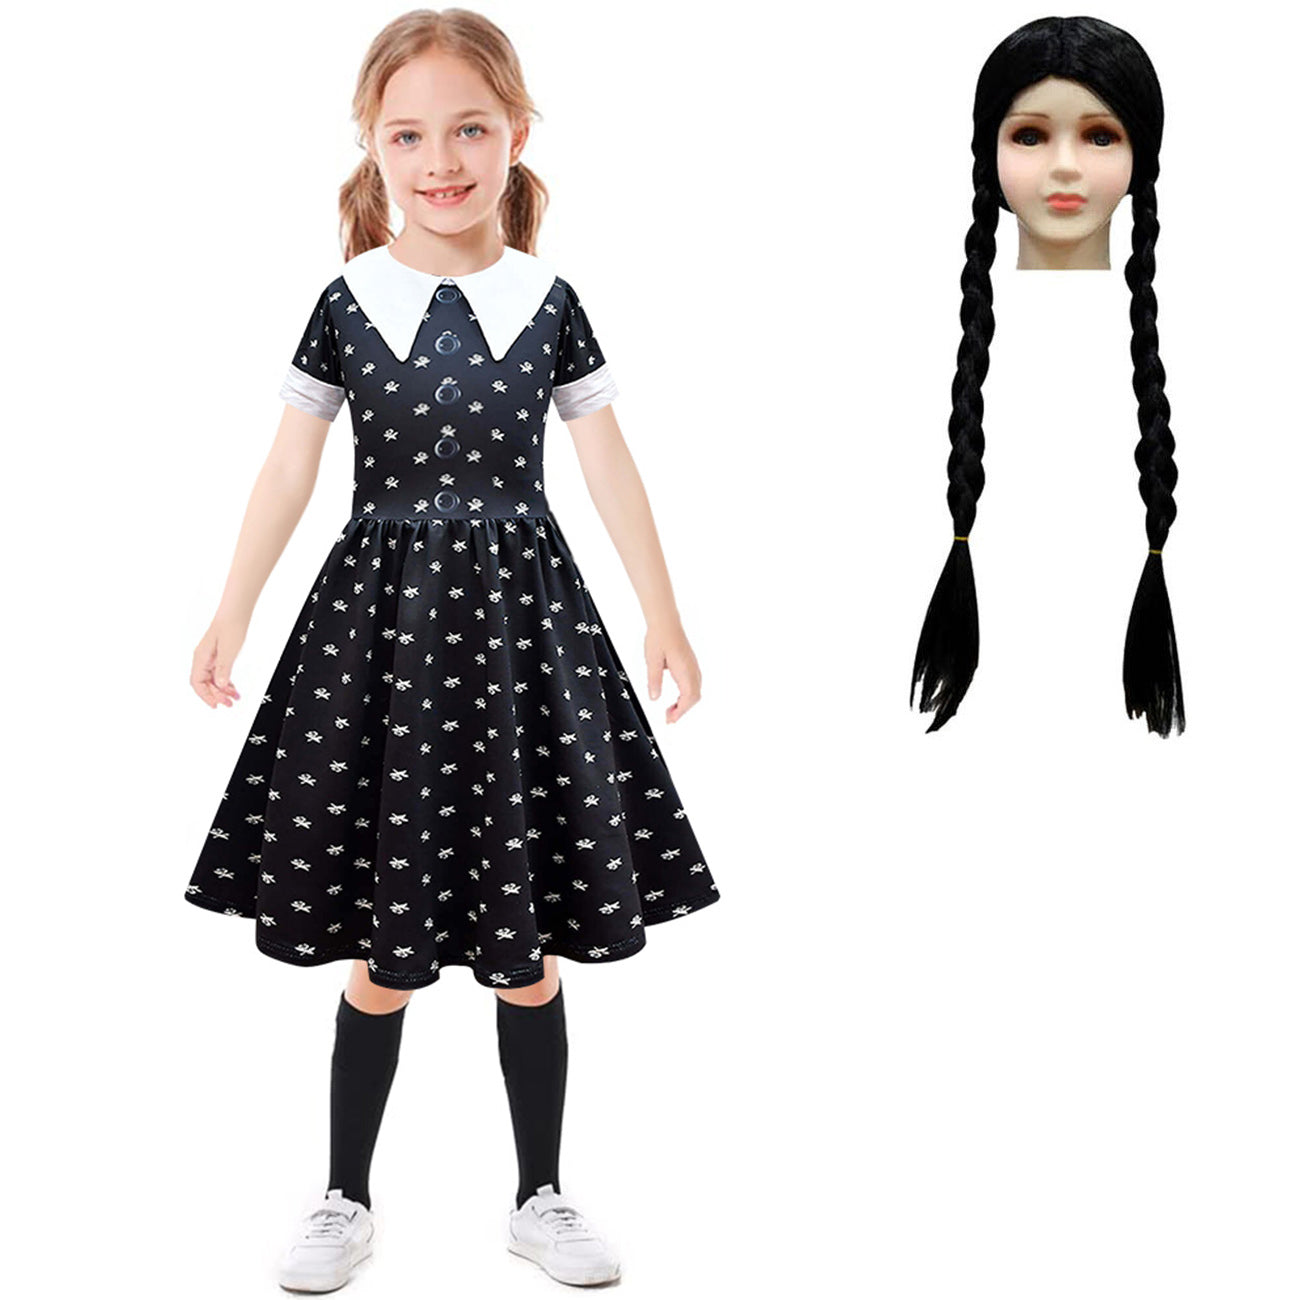 Girls Wednesday Dress Kids Wednesdays Addams Costume Wednesday Wig Gloves Bag for Cosplay 4-12 Years